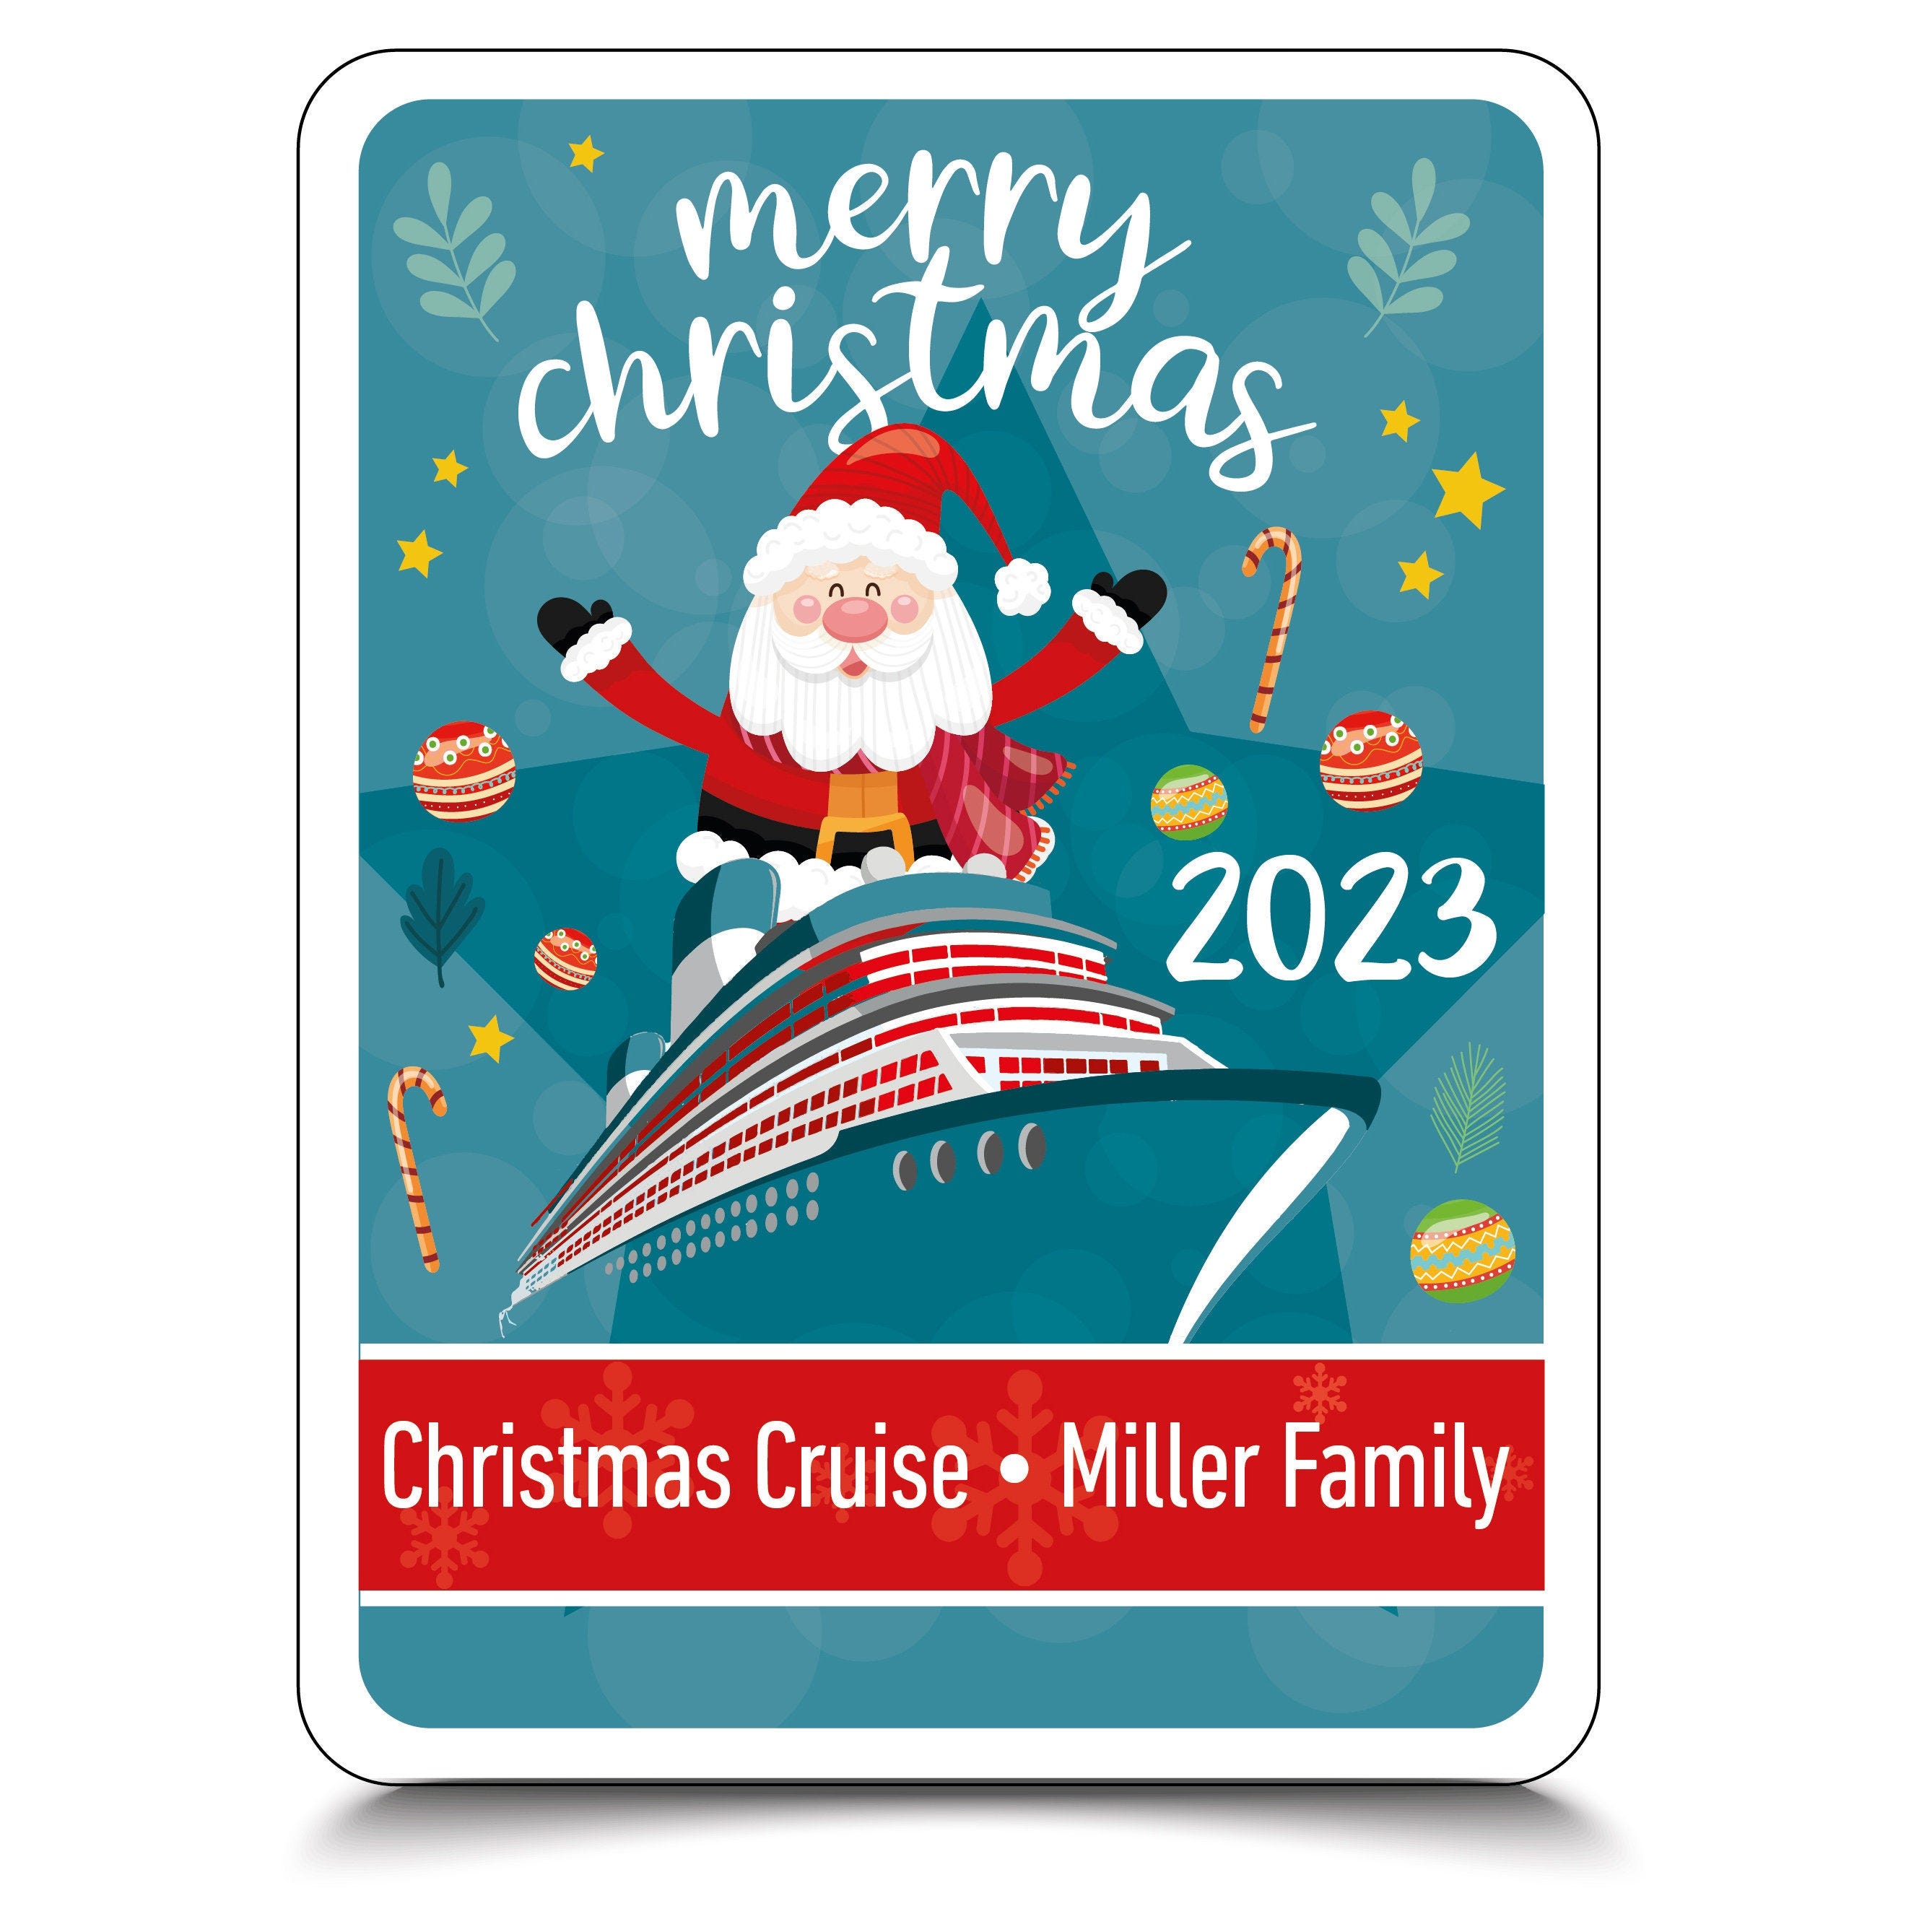 Personalized Christmas Cruise Door Magnets | Cruise Door Decorations | Custom Magnets for Christmas cruise | Holidays Cruise Magnet